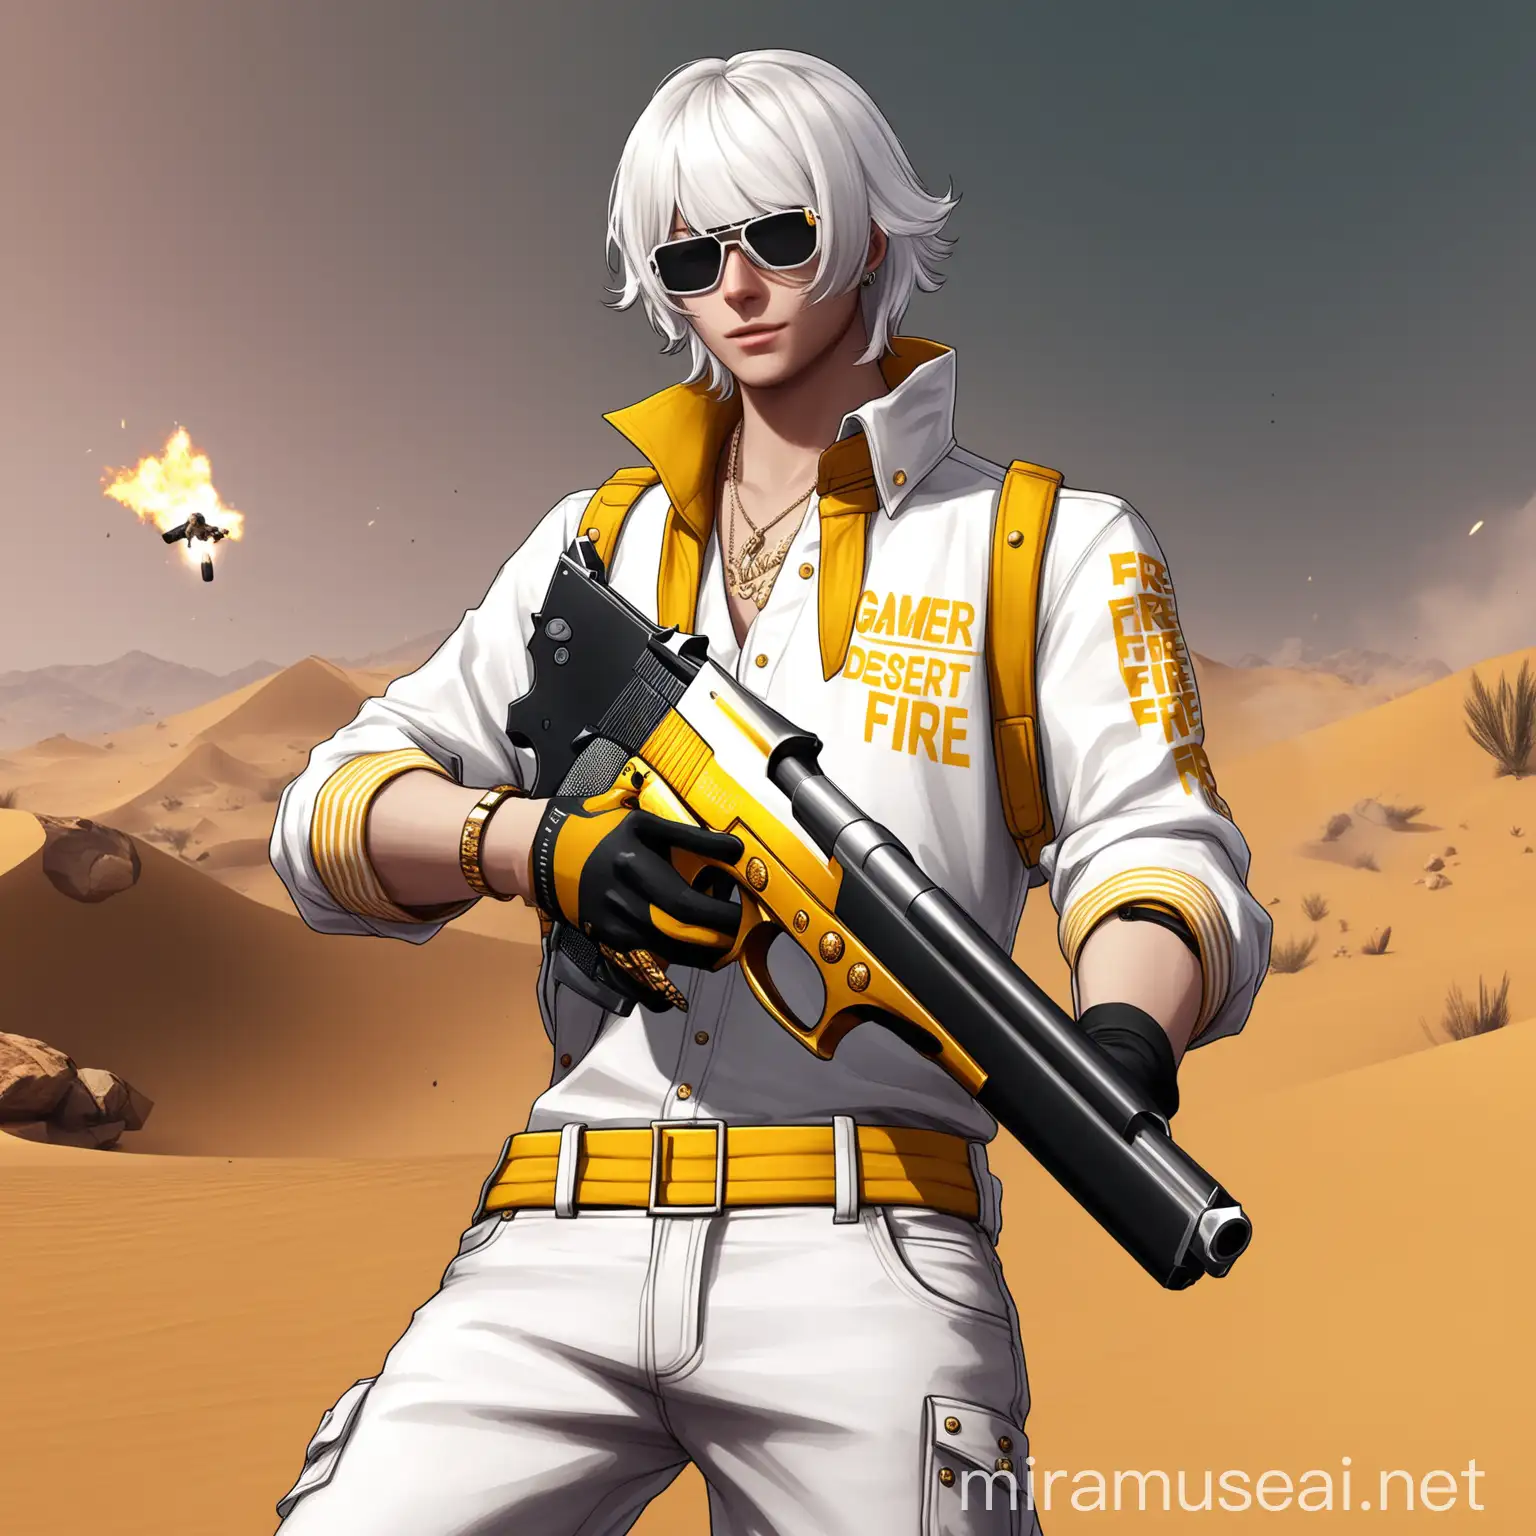 Gamer with White Hair Holds Desert Eagle in Free Fire Aesthetic